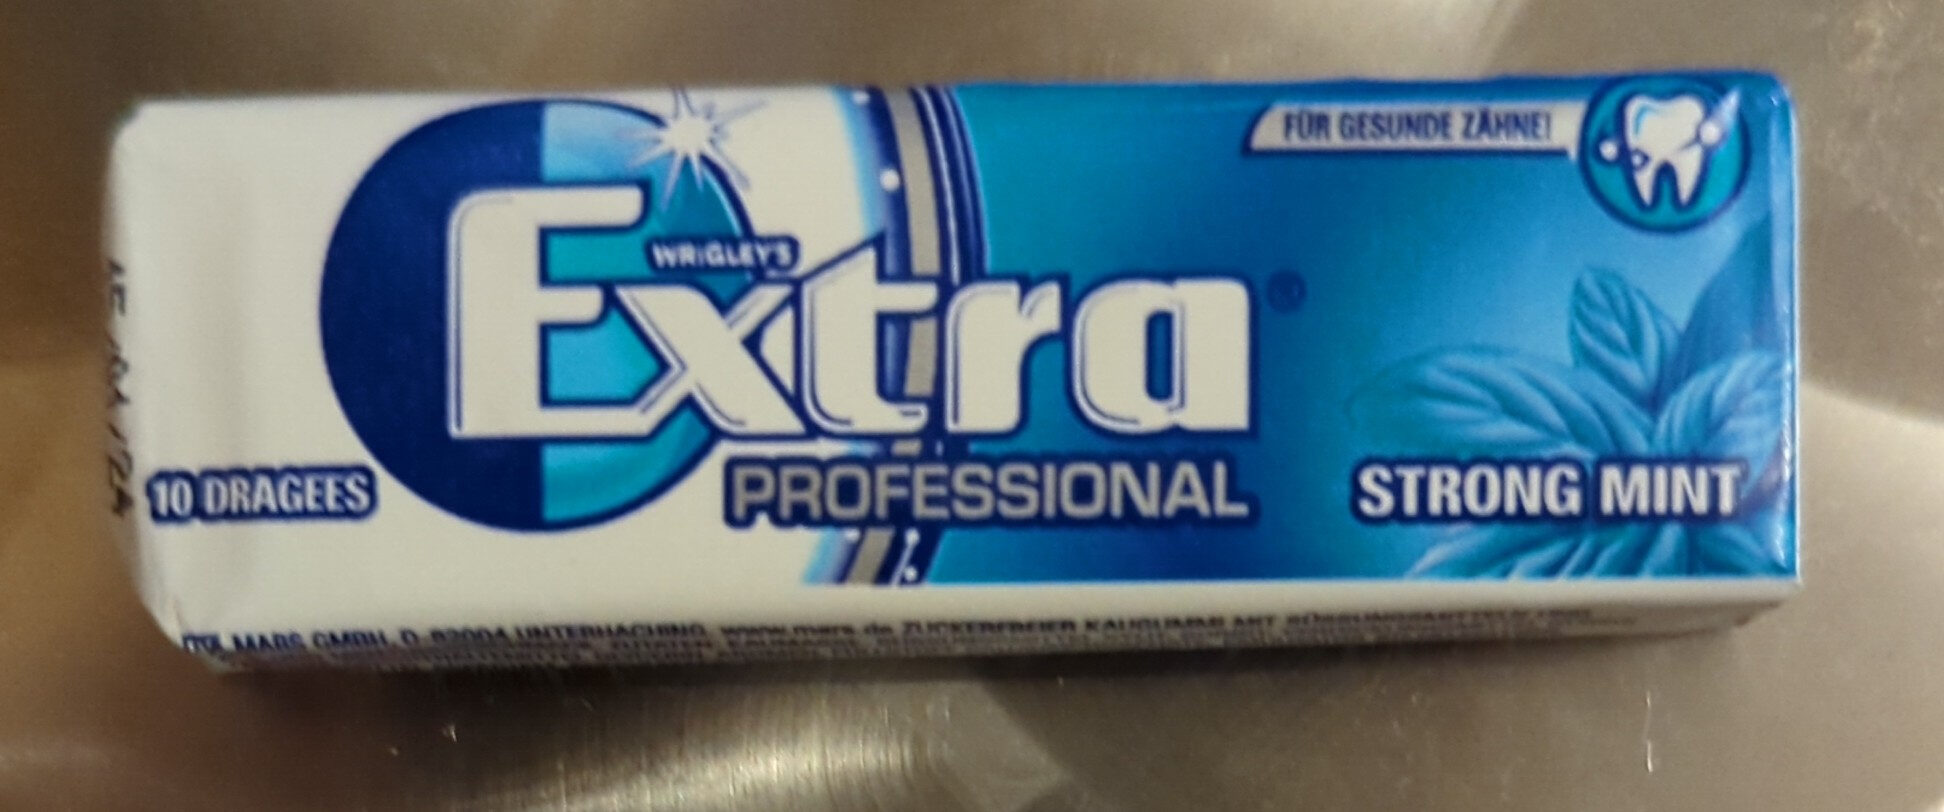 Extra Professional - Produkt